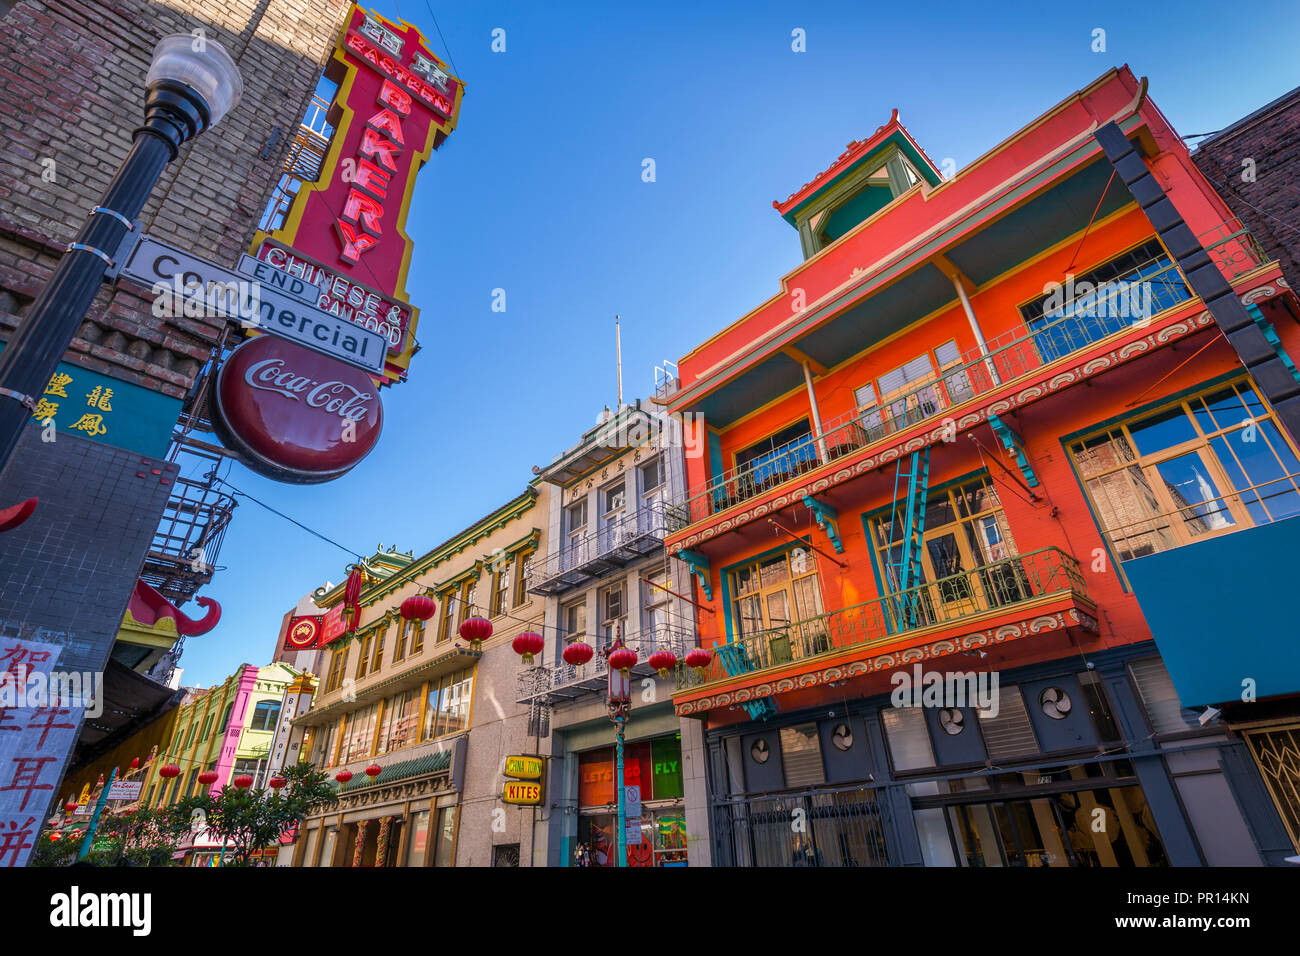 View of brightly coloured architecture in Chinatown, San Francisco, California, United States of America, North America Stock Photo